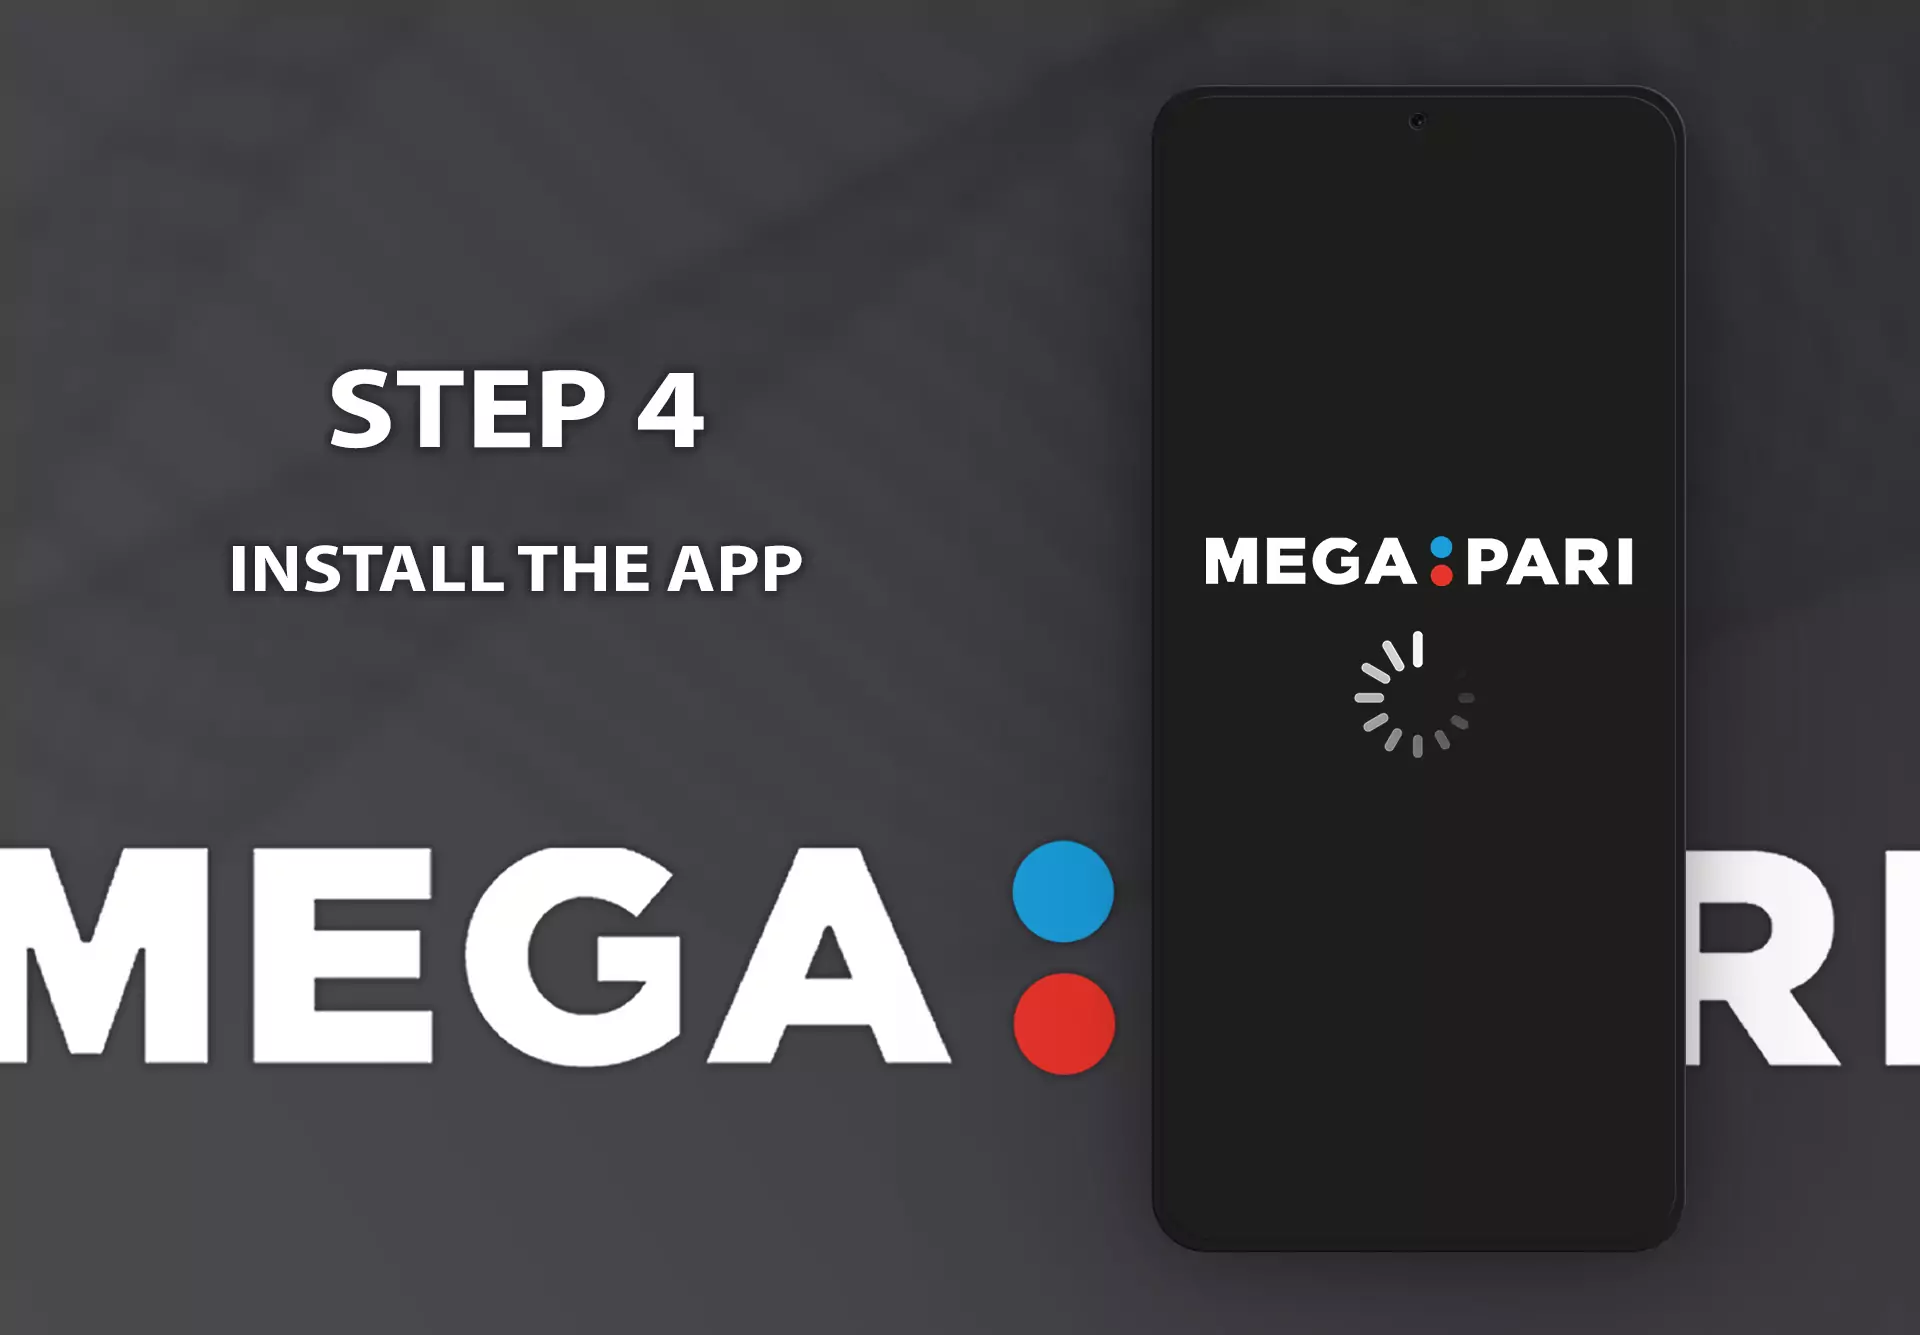 Run the apk file and install the MegaPari app.